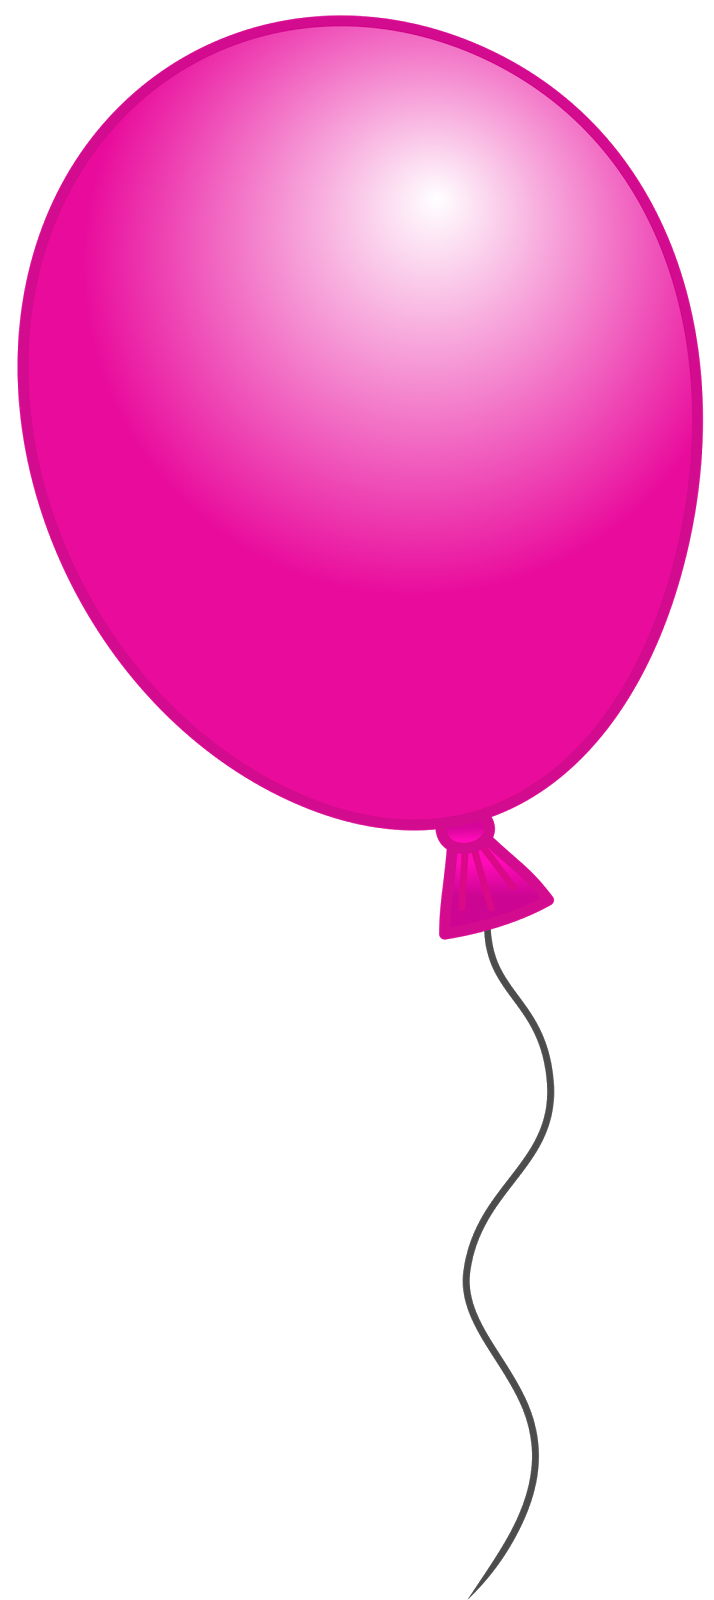 Balloon Background Clipart